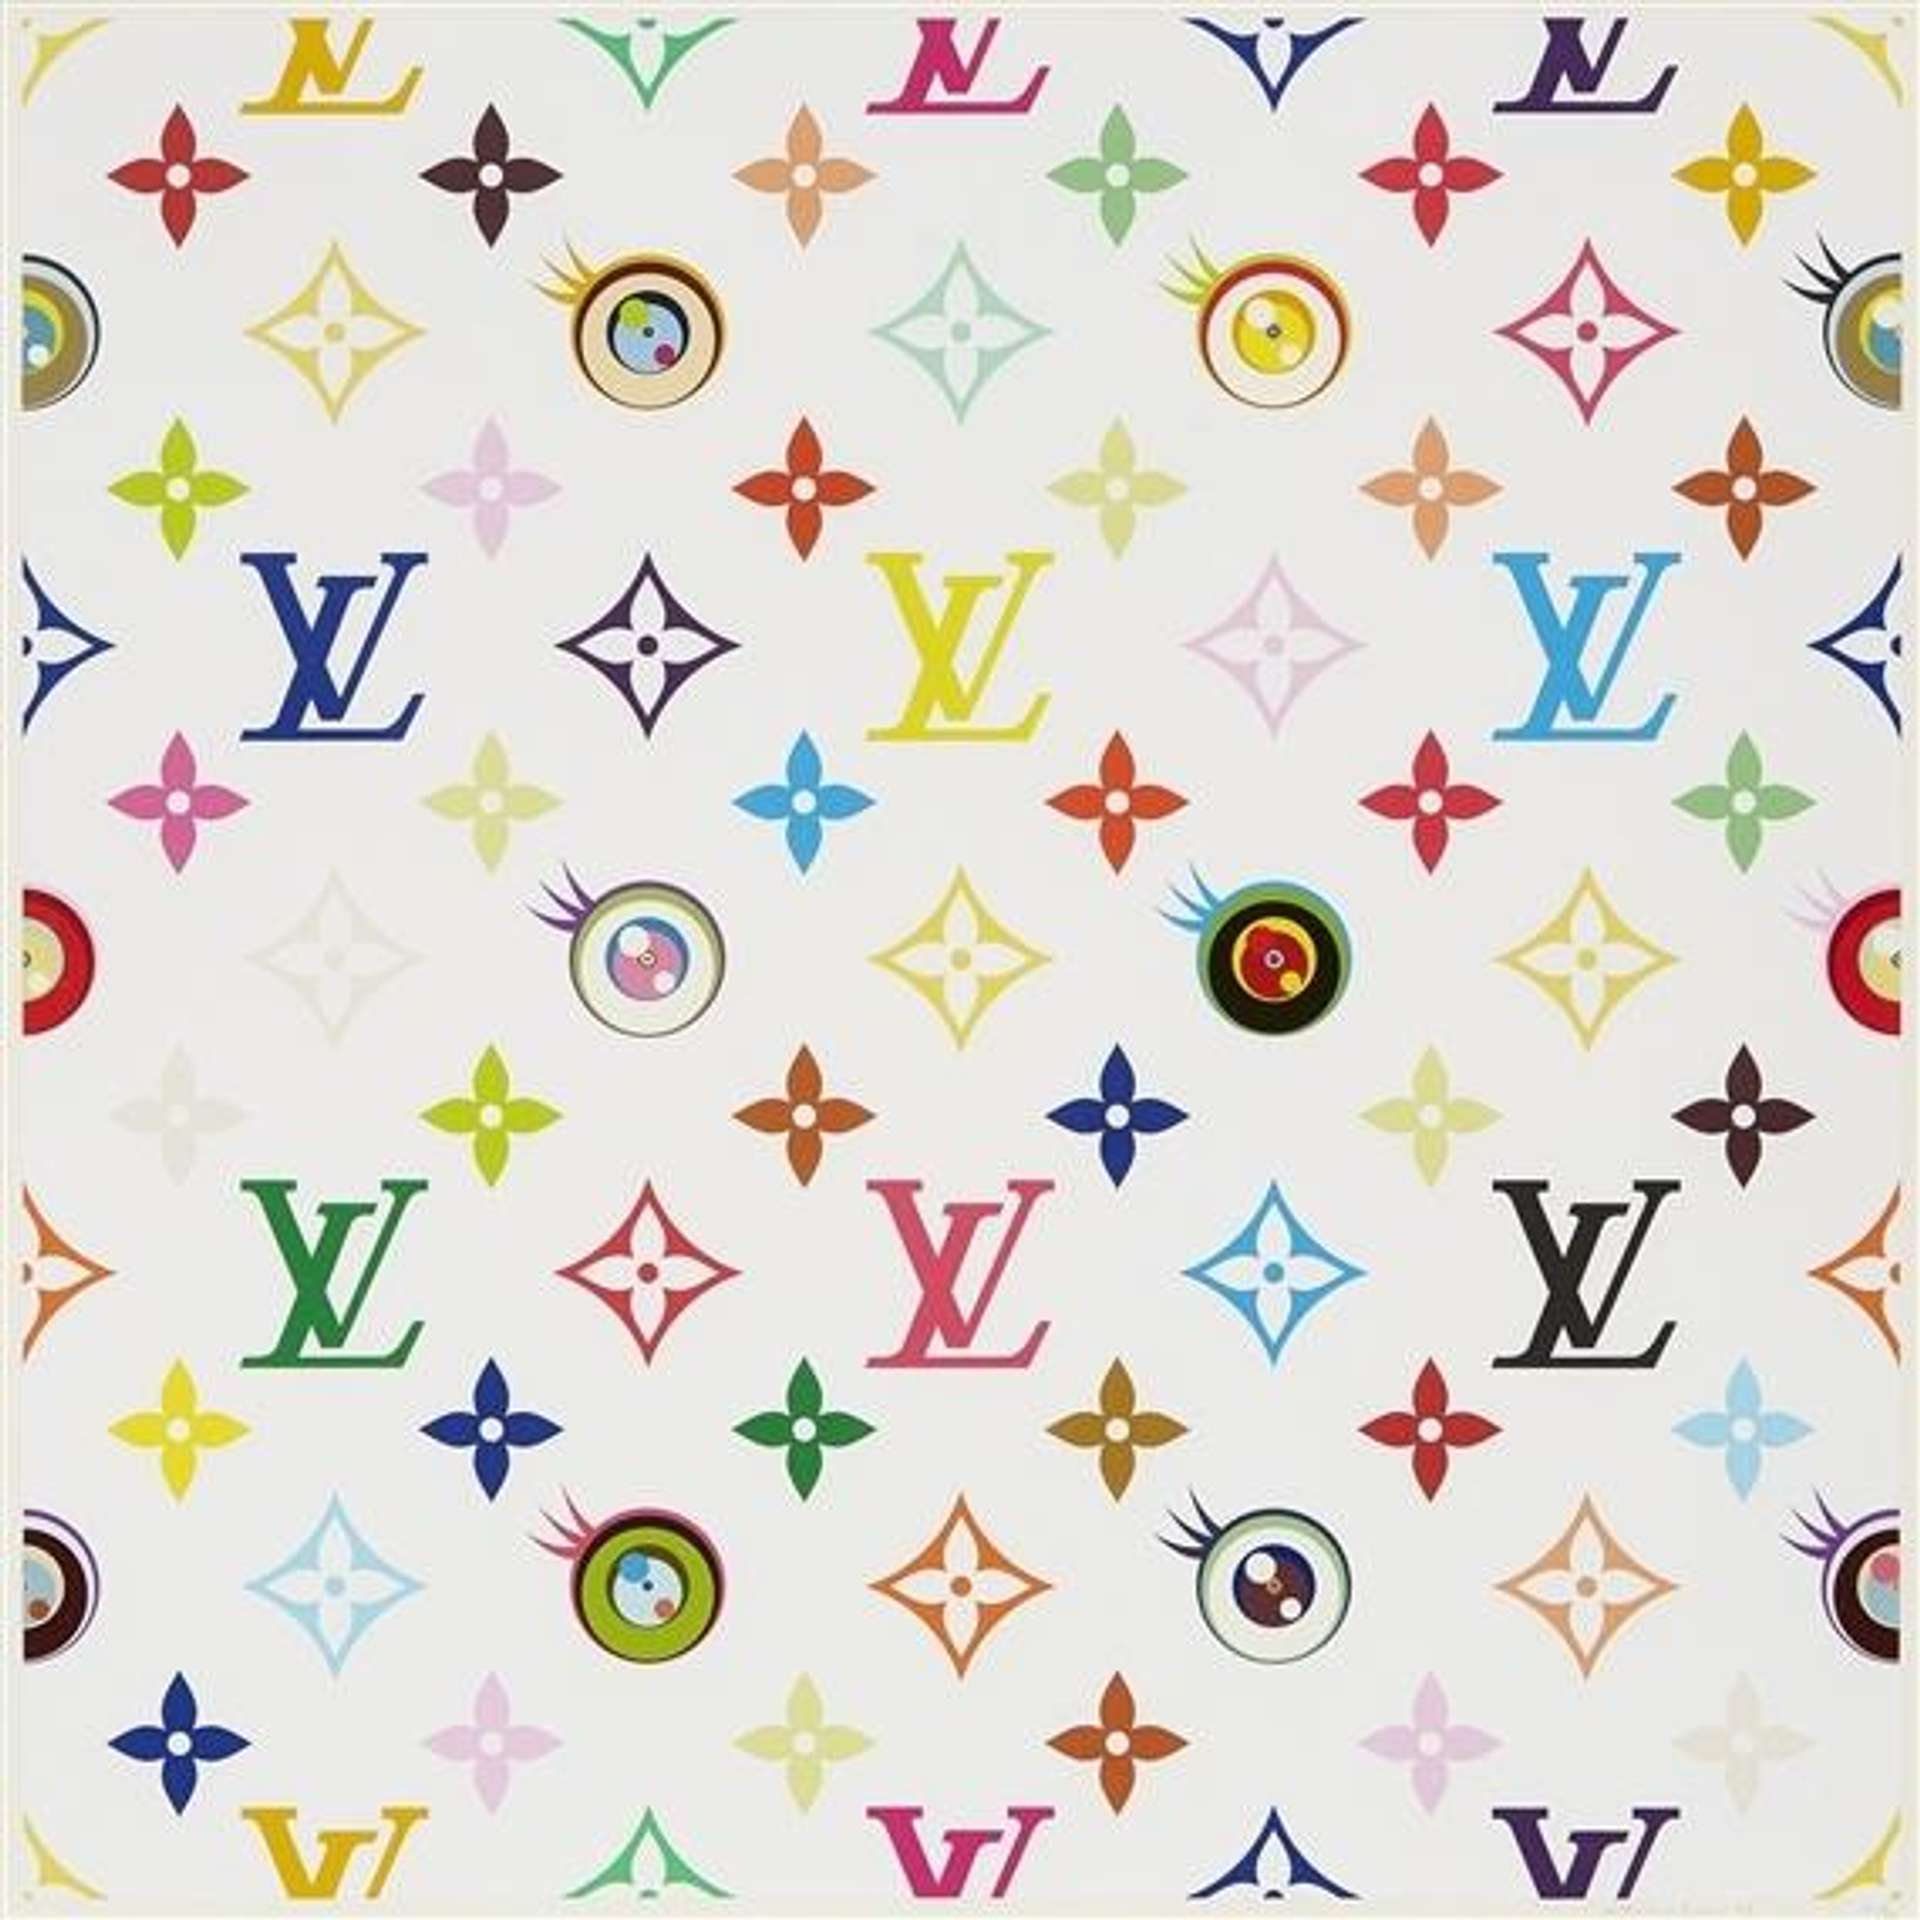 Louis Vuitton Eye Love Superflat by Takashi Murakami